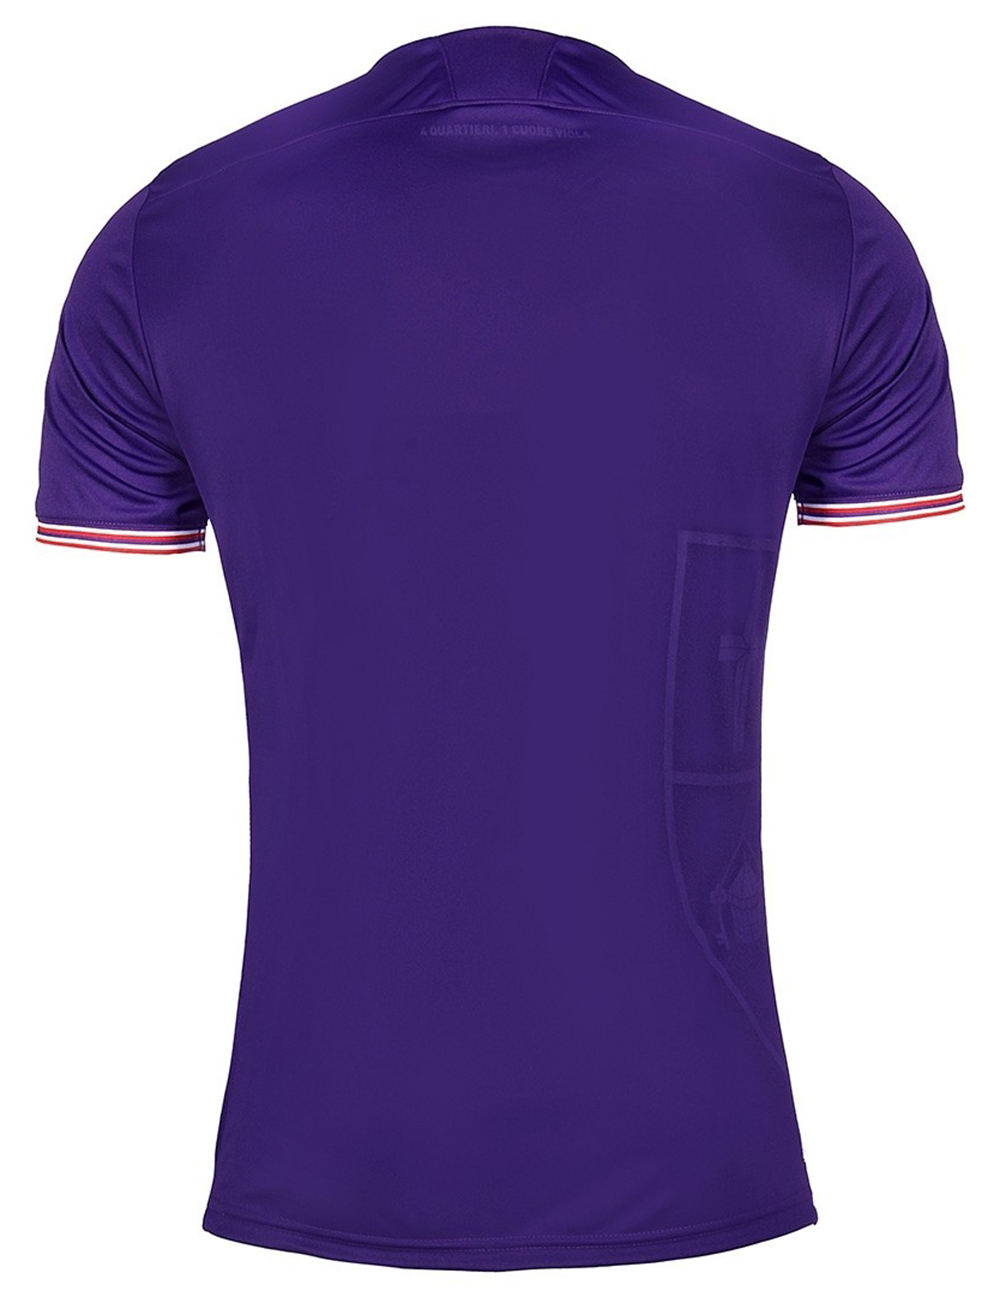 ACF Fiorentina Le Coq Sportif Kits 2017 18 Home